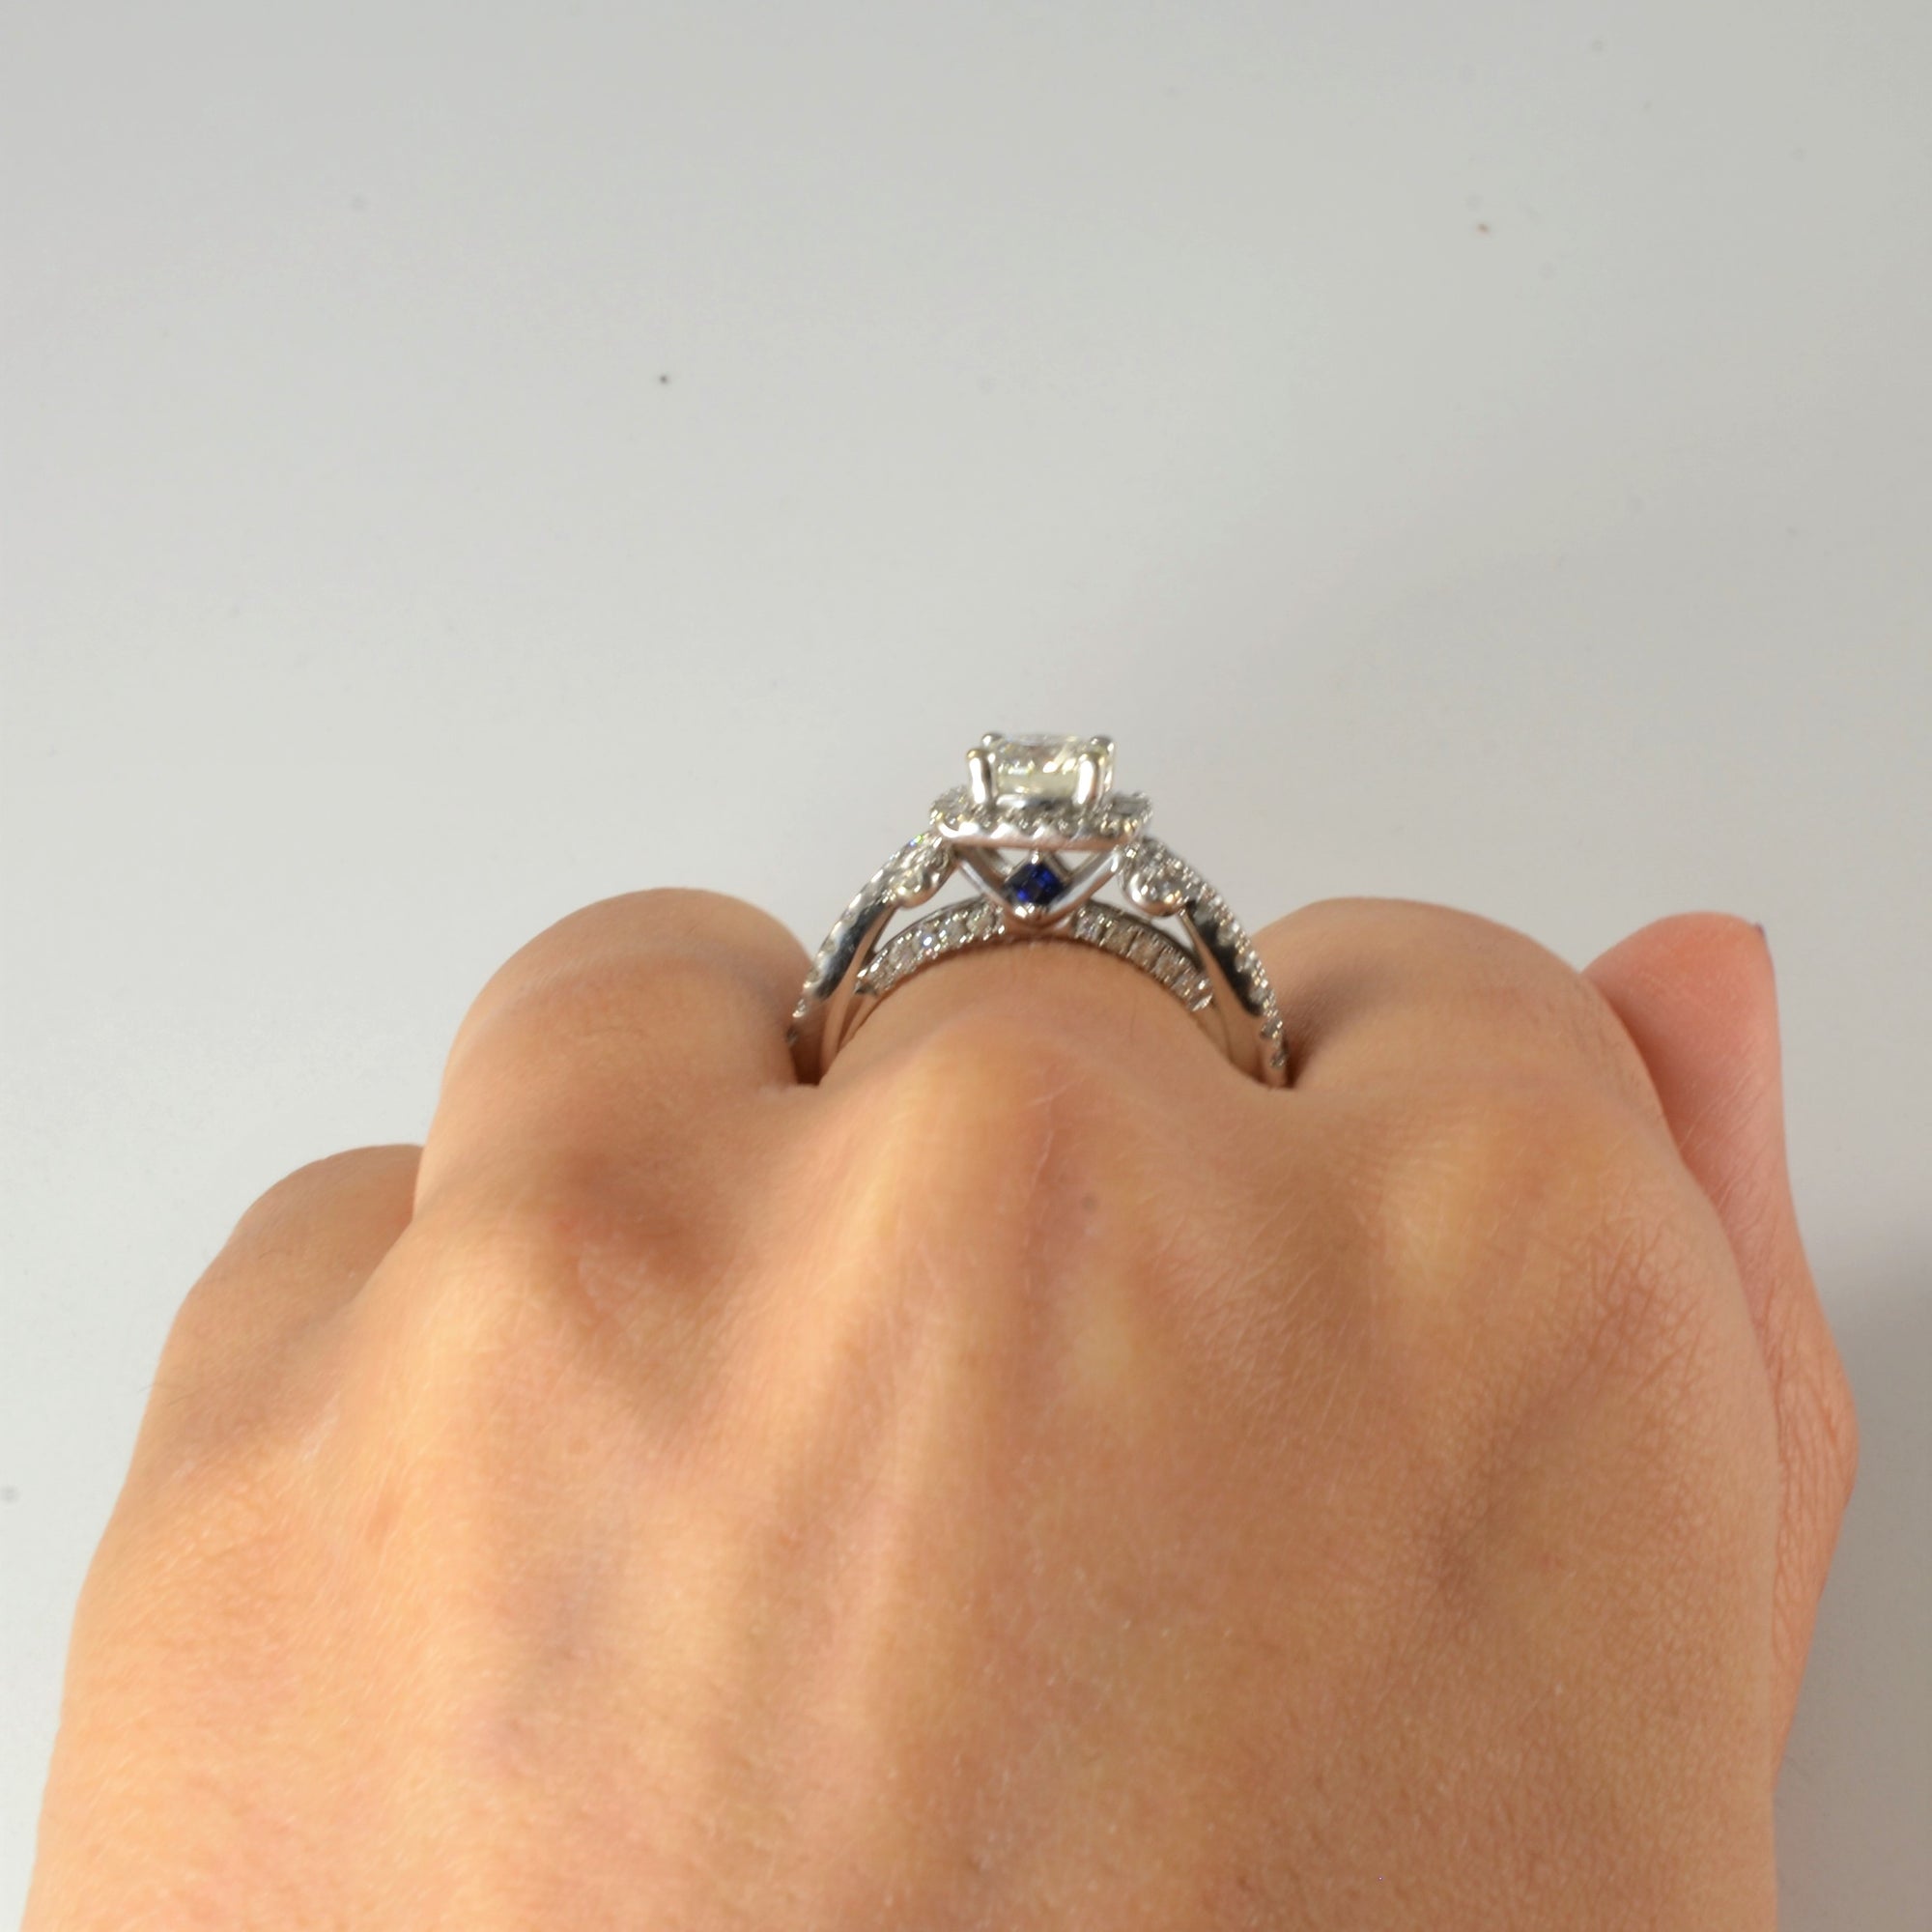 'Vera Wang' Infinity Knot Detailed Diamond Halo Ring | 1.65ctw | SZ 7 |